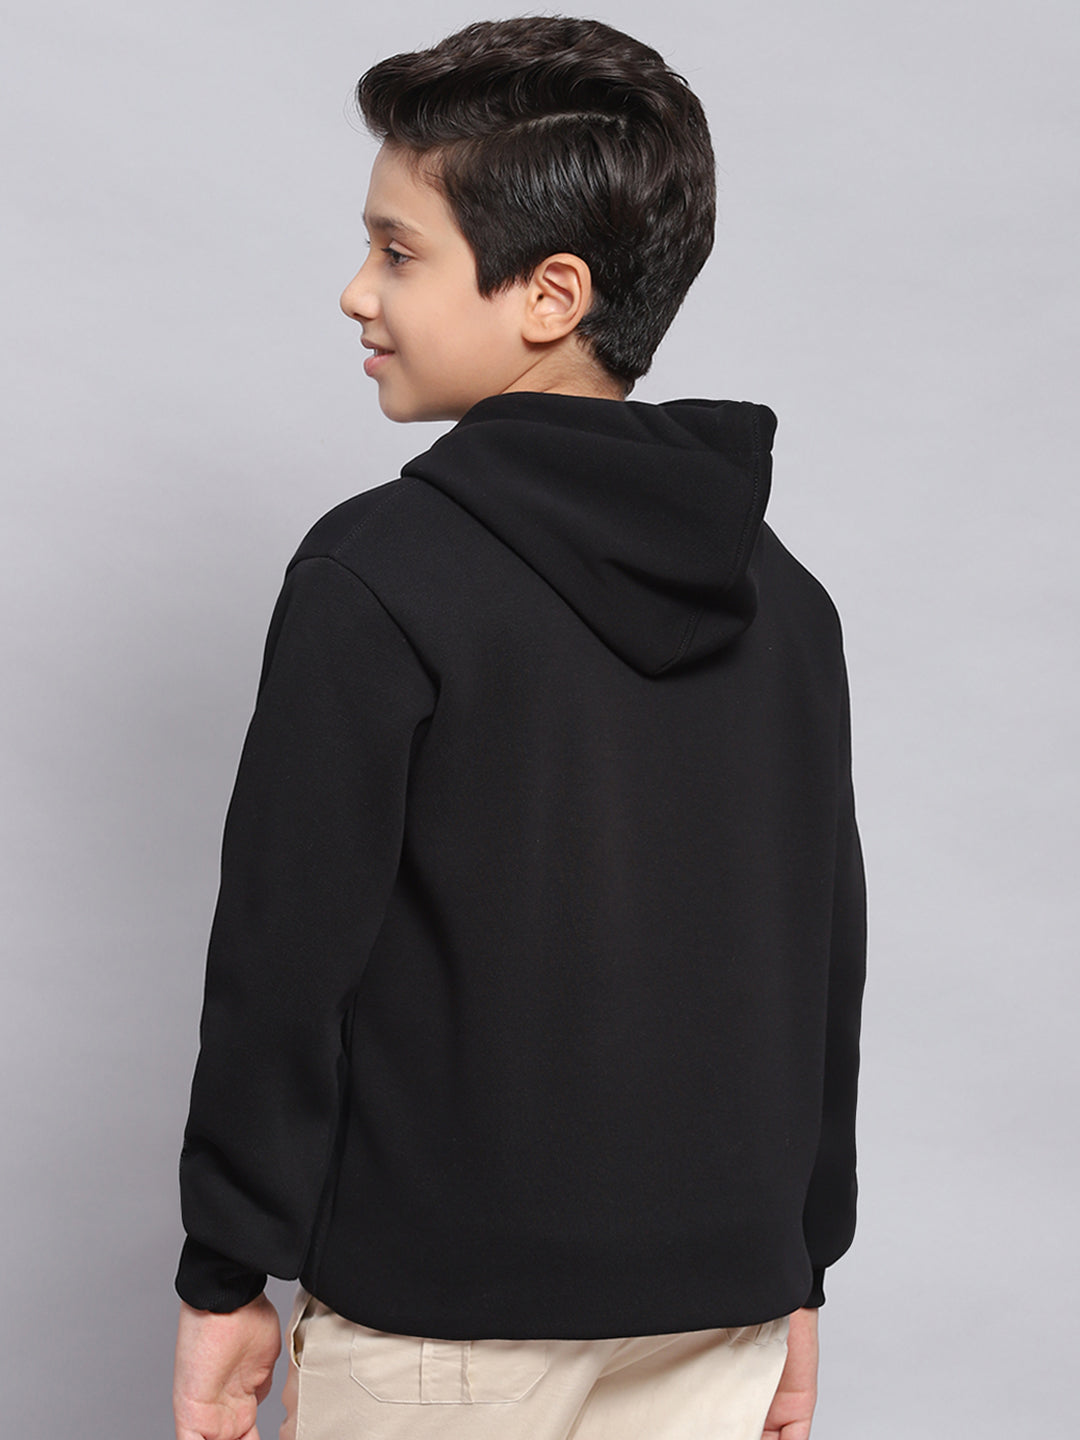 Boys Black Printed Hooded Full Sleeve Sweatshirt